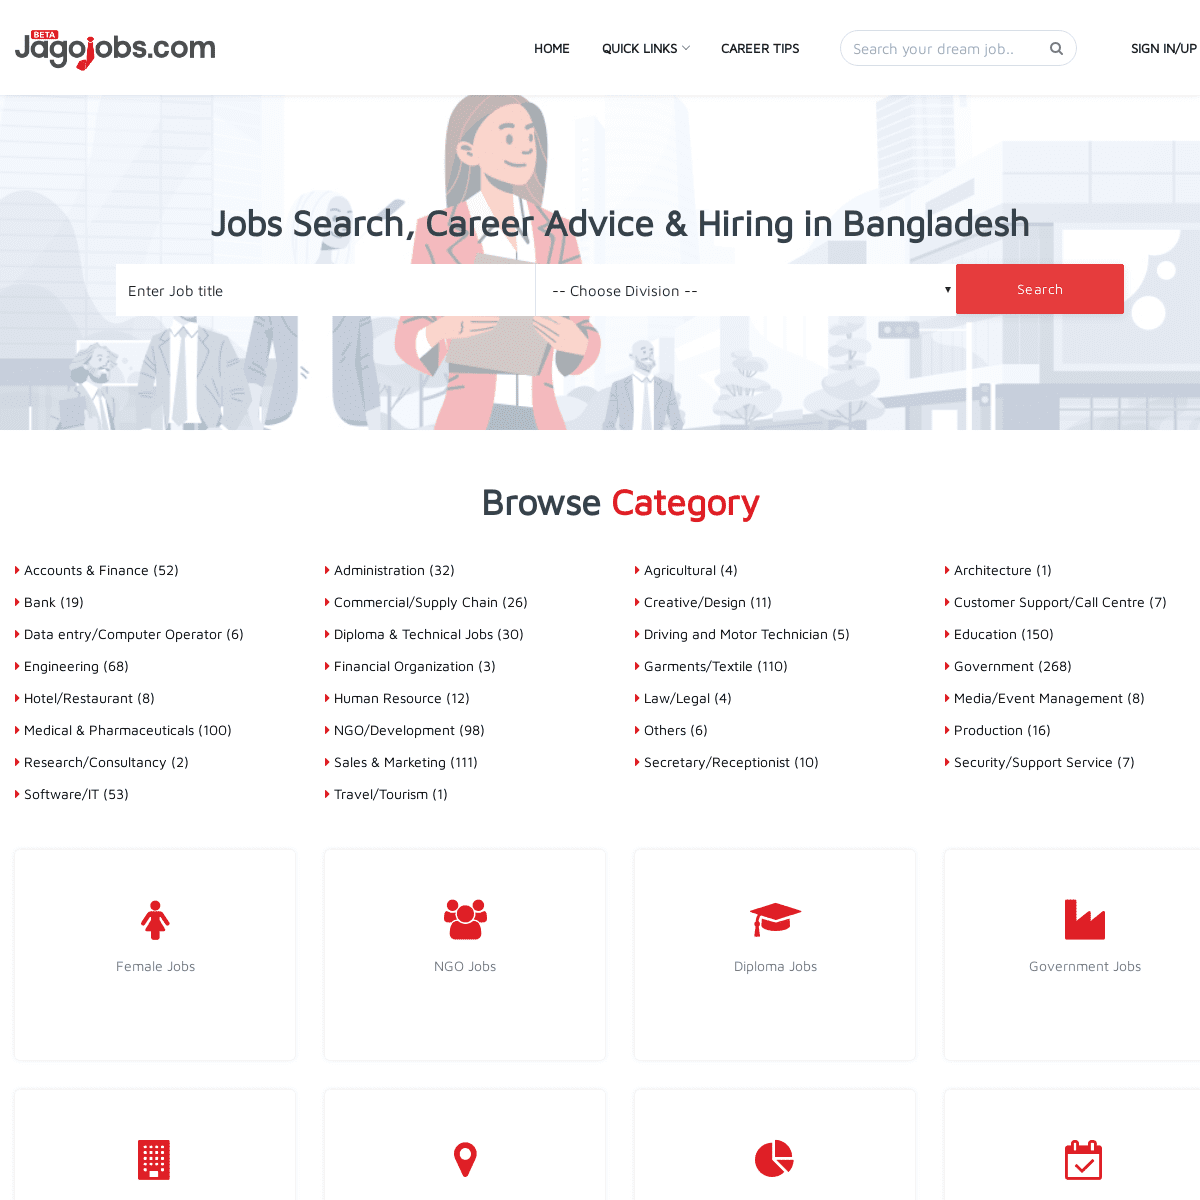 A complete backup of jagojobs.com